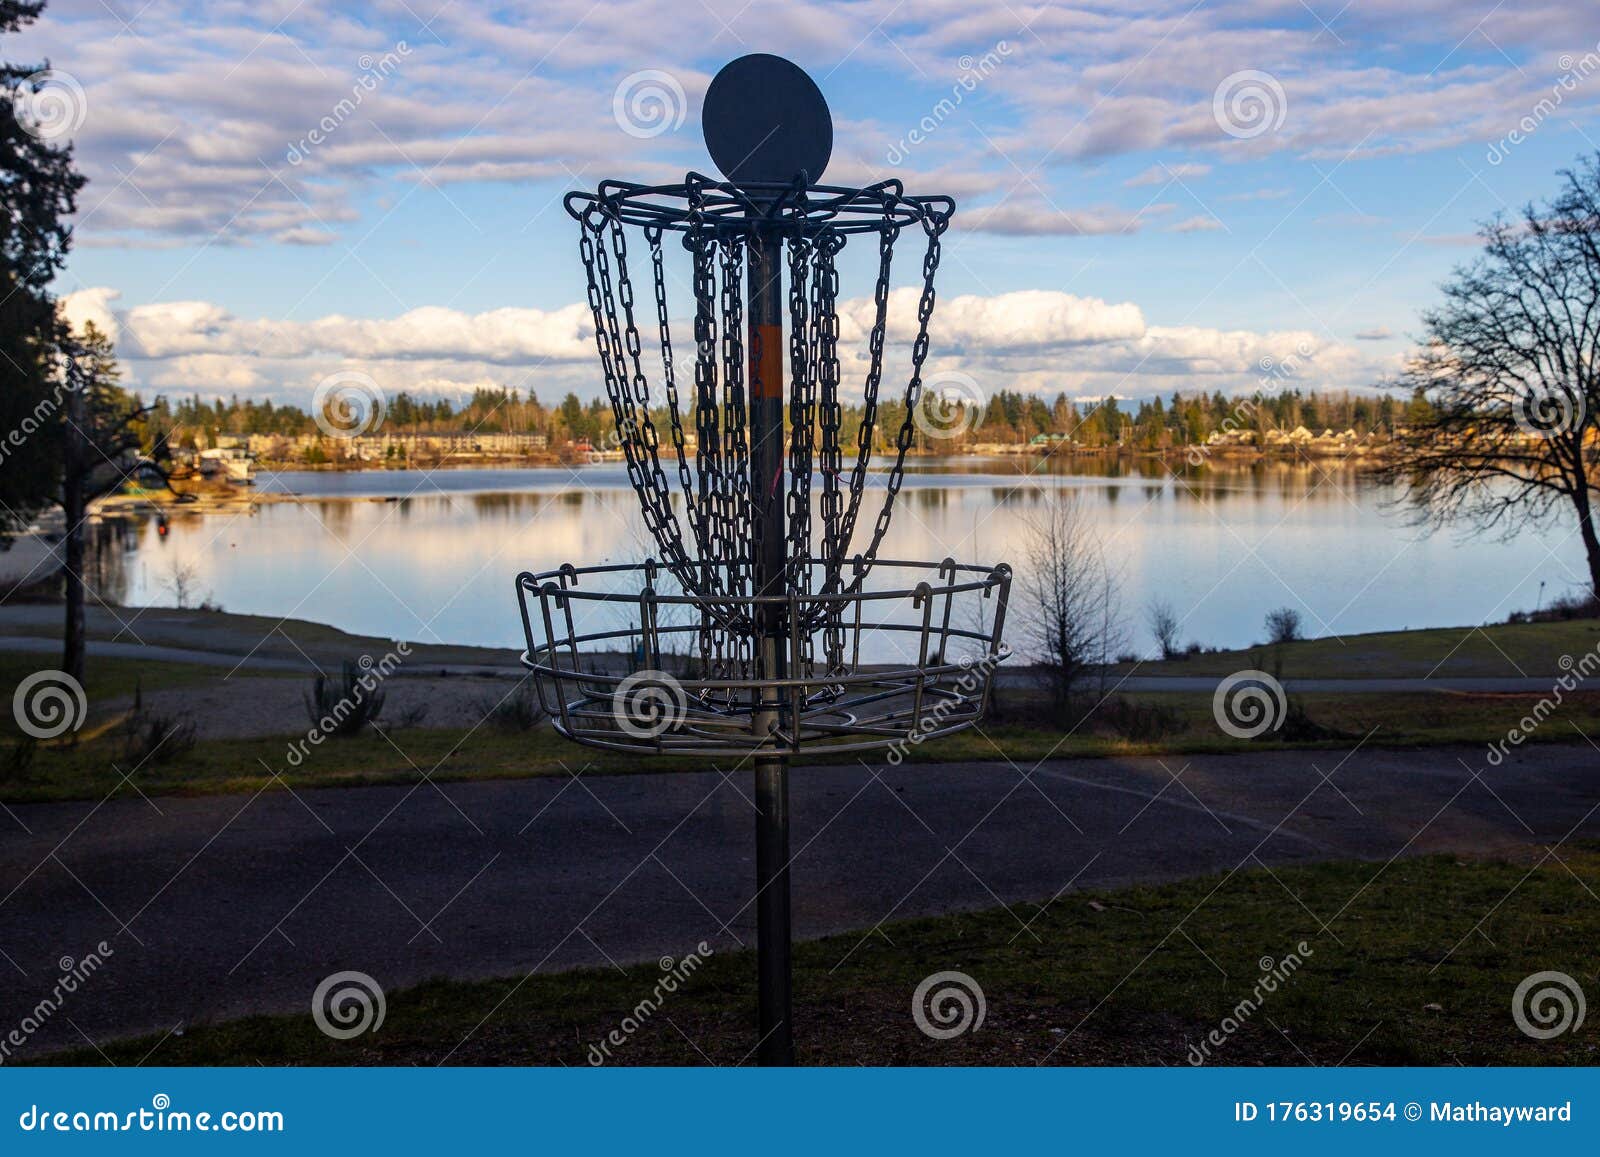 Disc Golf Basket On Pretty Park Course Near A Lake Under ...